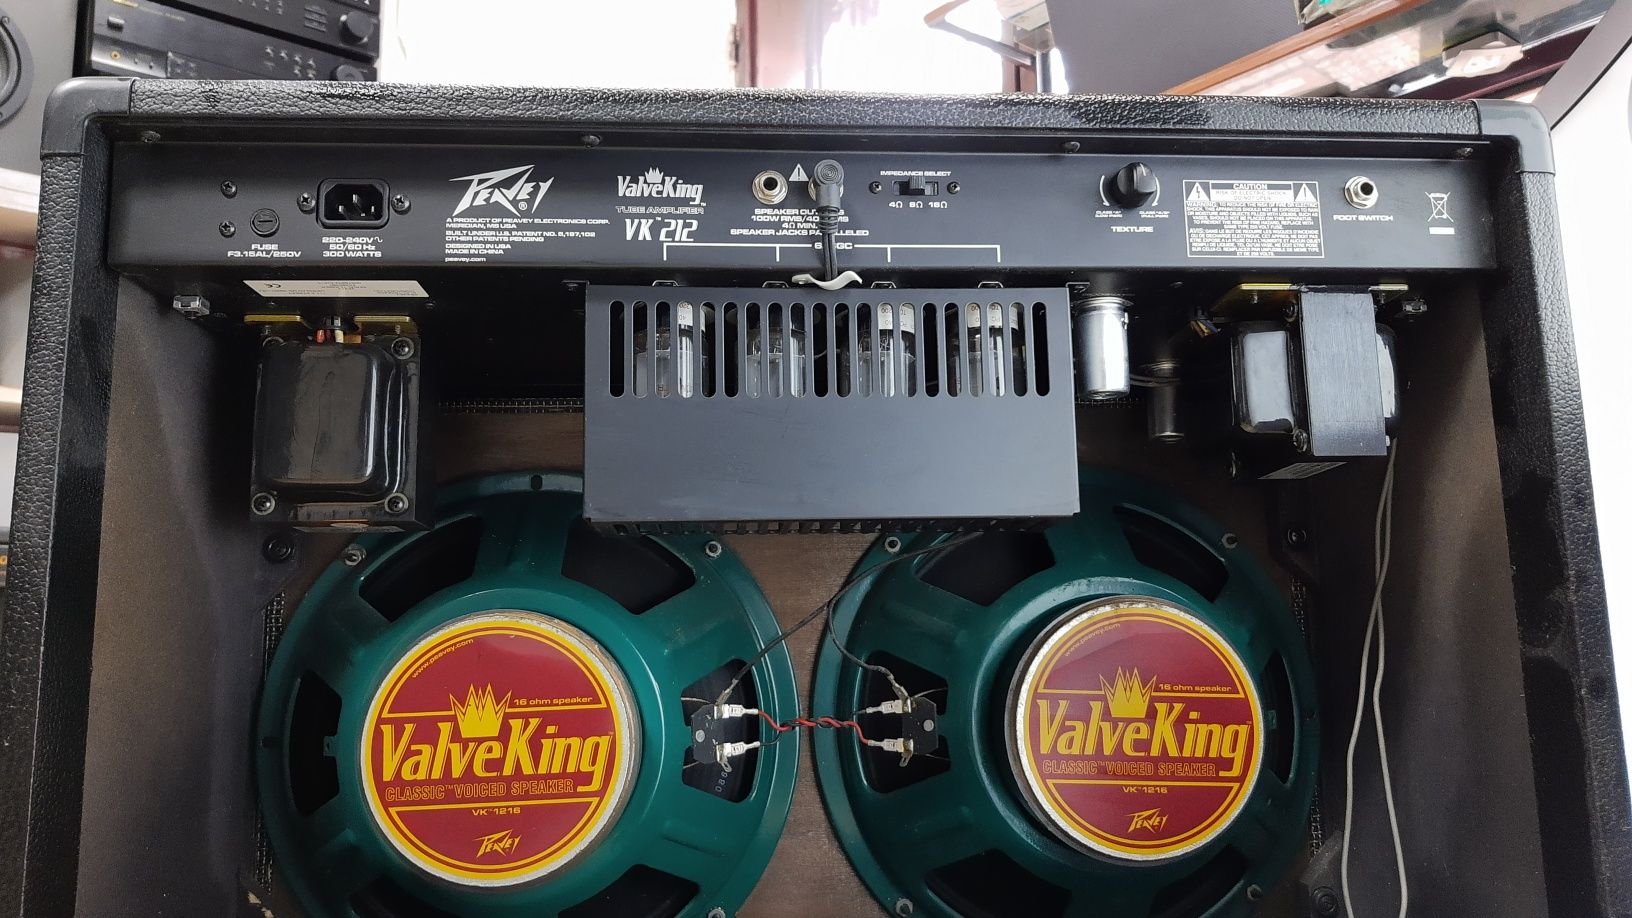 PEAVEY-ValveKing vk212-Лампов усилвател 100 W. Перфектен